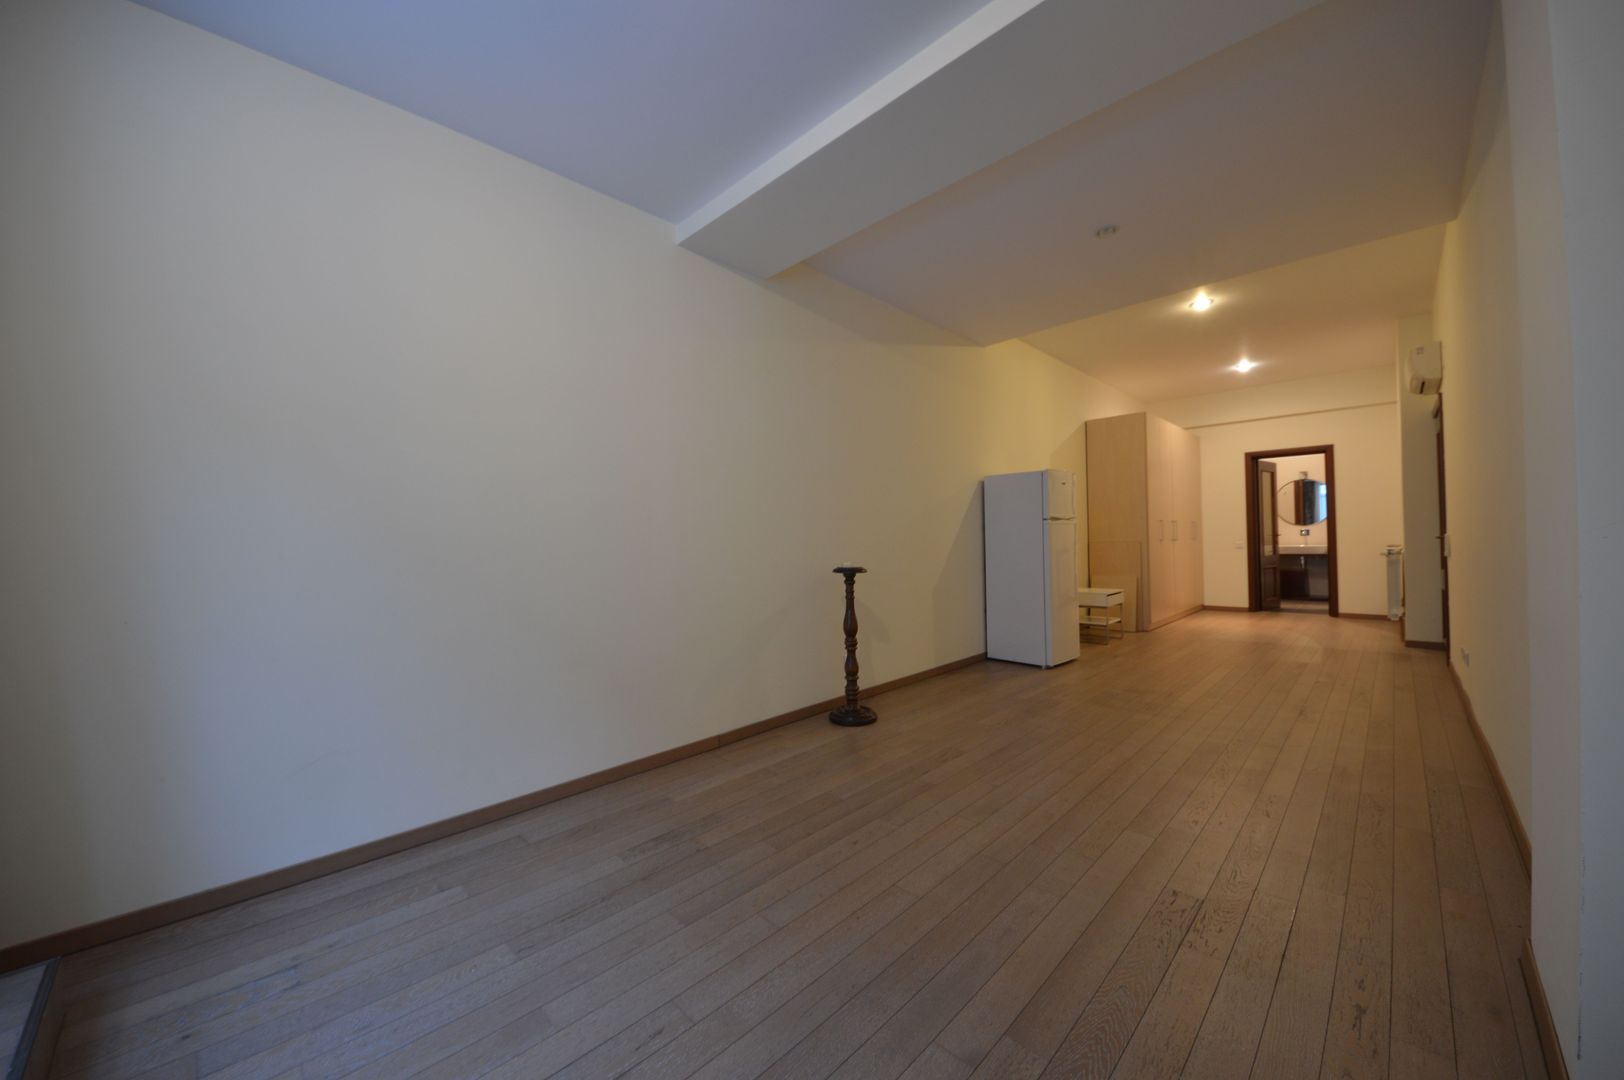 Takayama House – Duplex 5 camere Herastrau-Nordului,curte proprie!